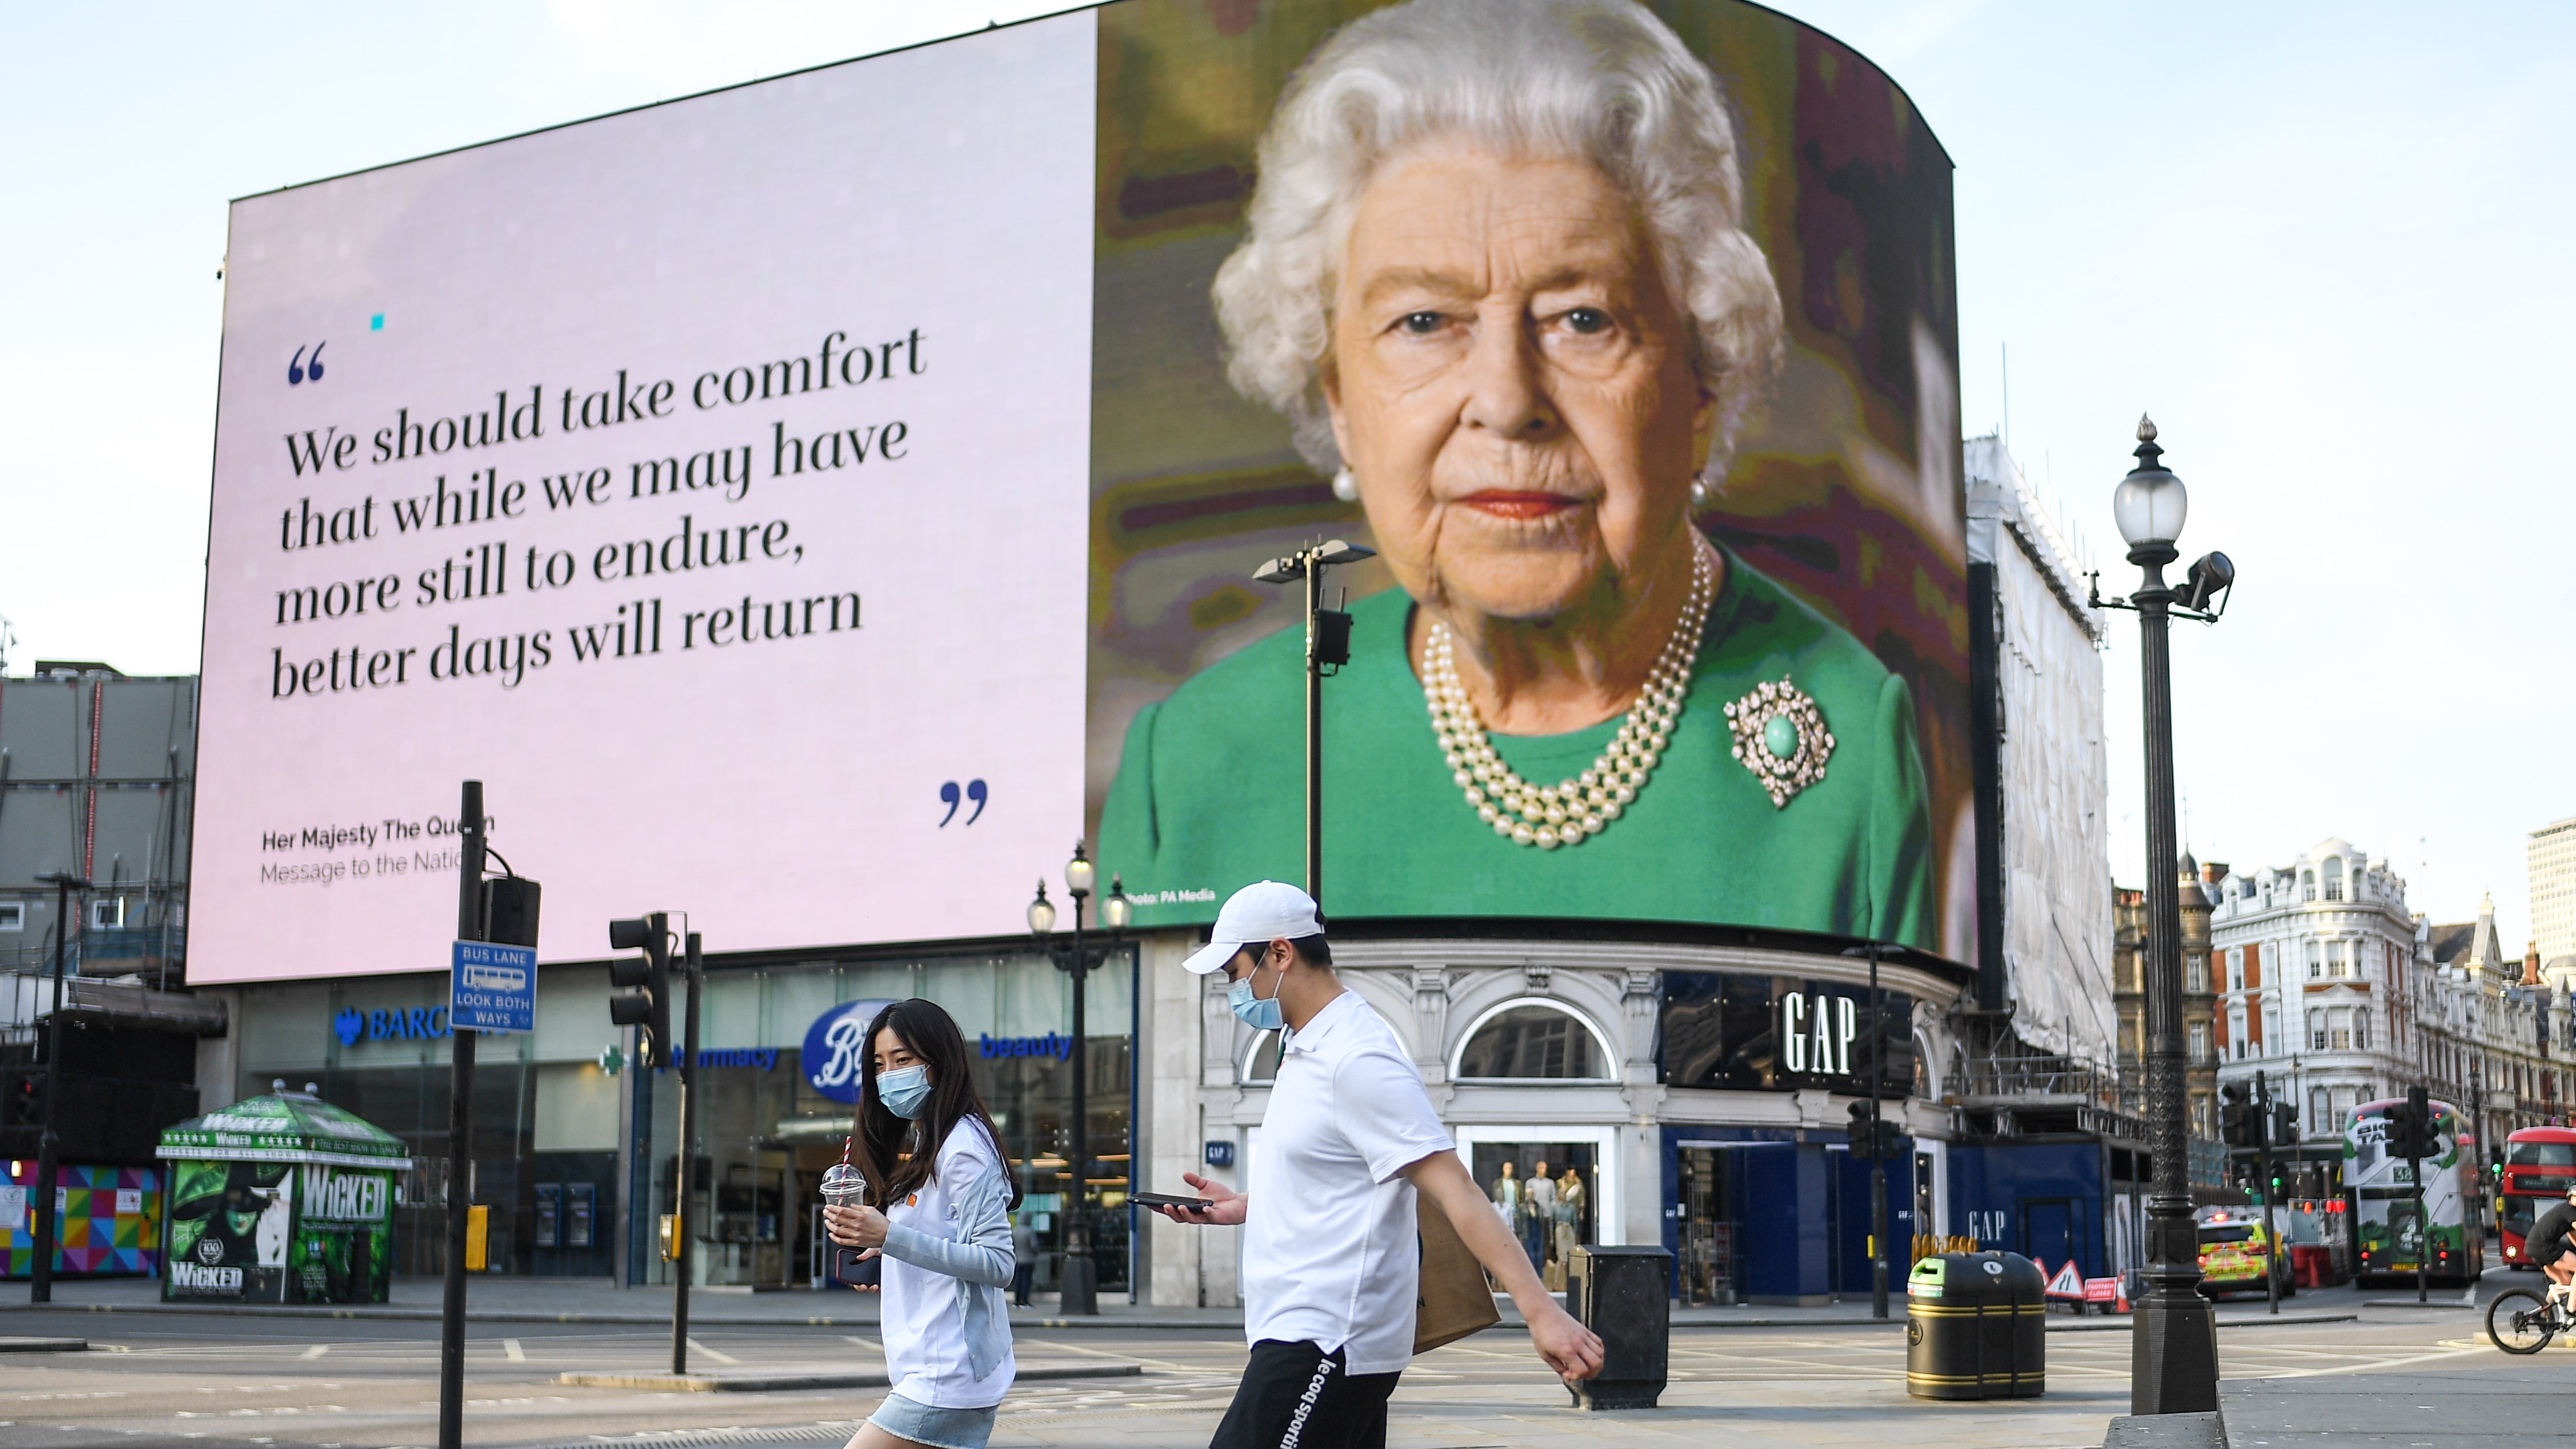 A couple wearing masks walk past an image of Queen Elizabeth II.